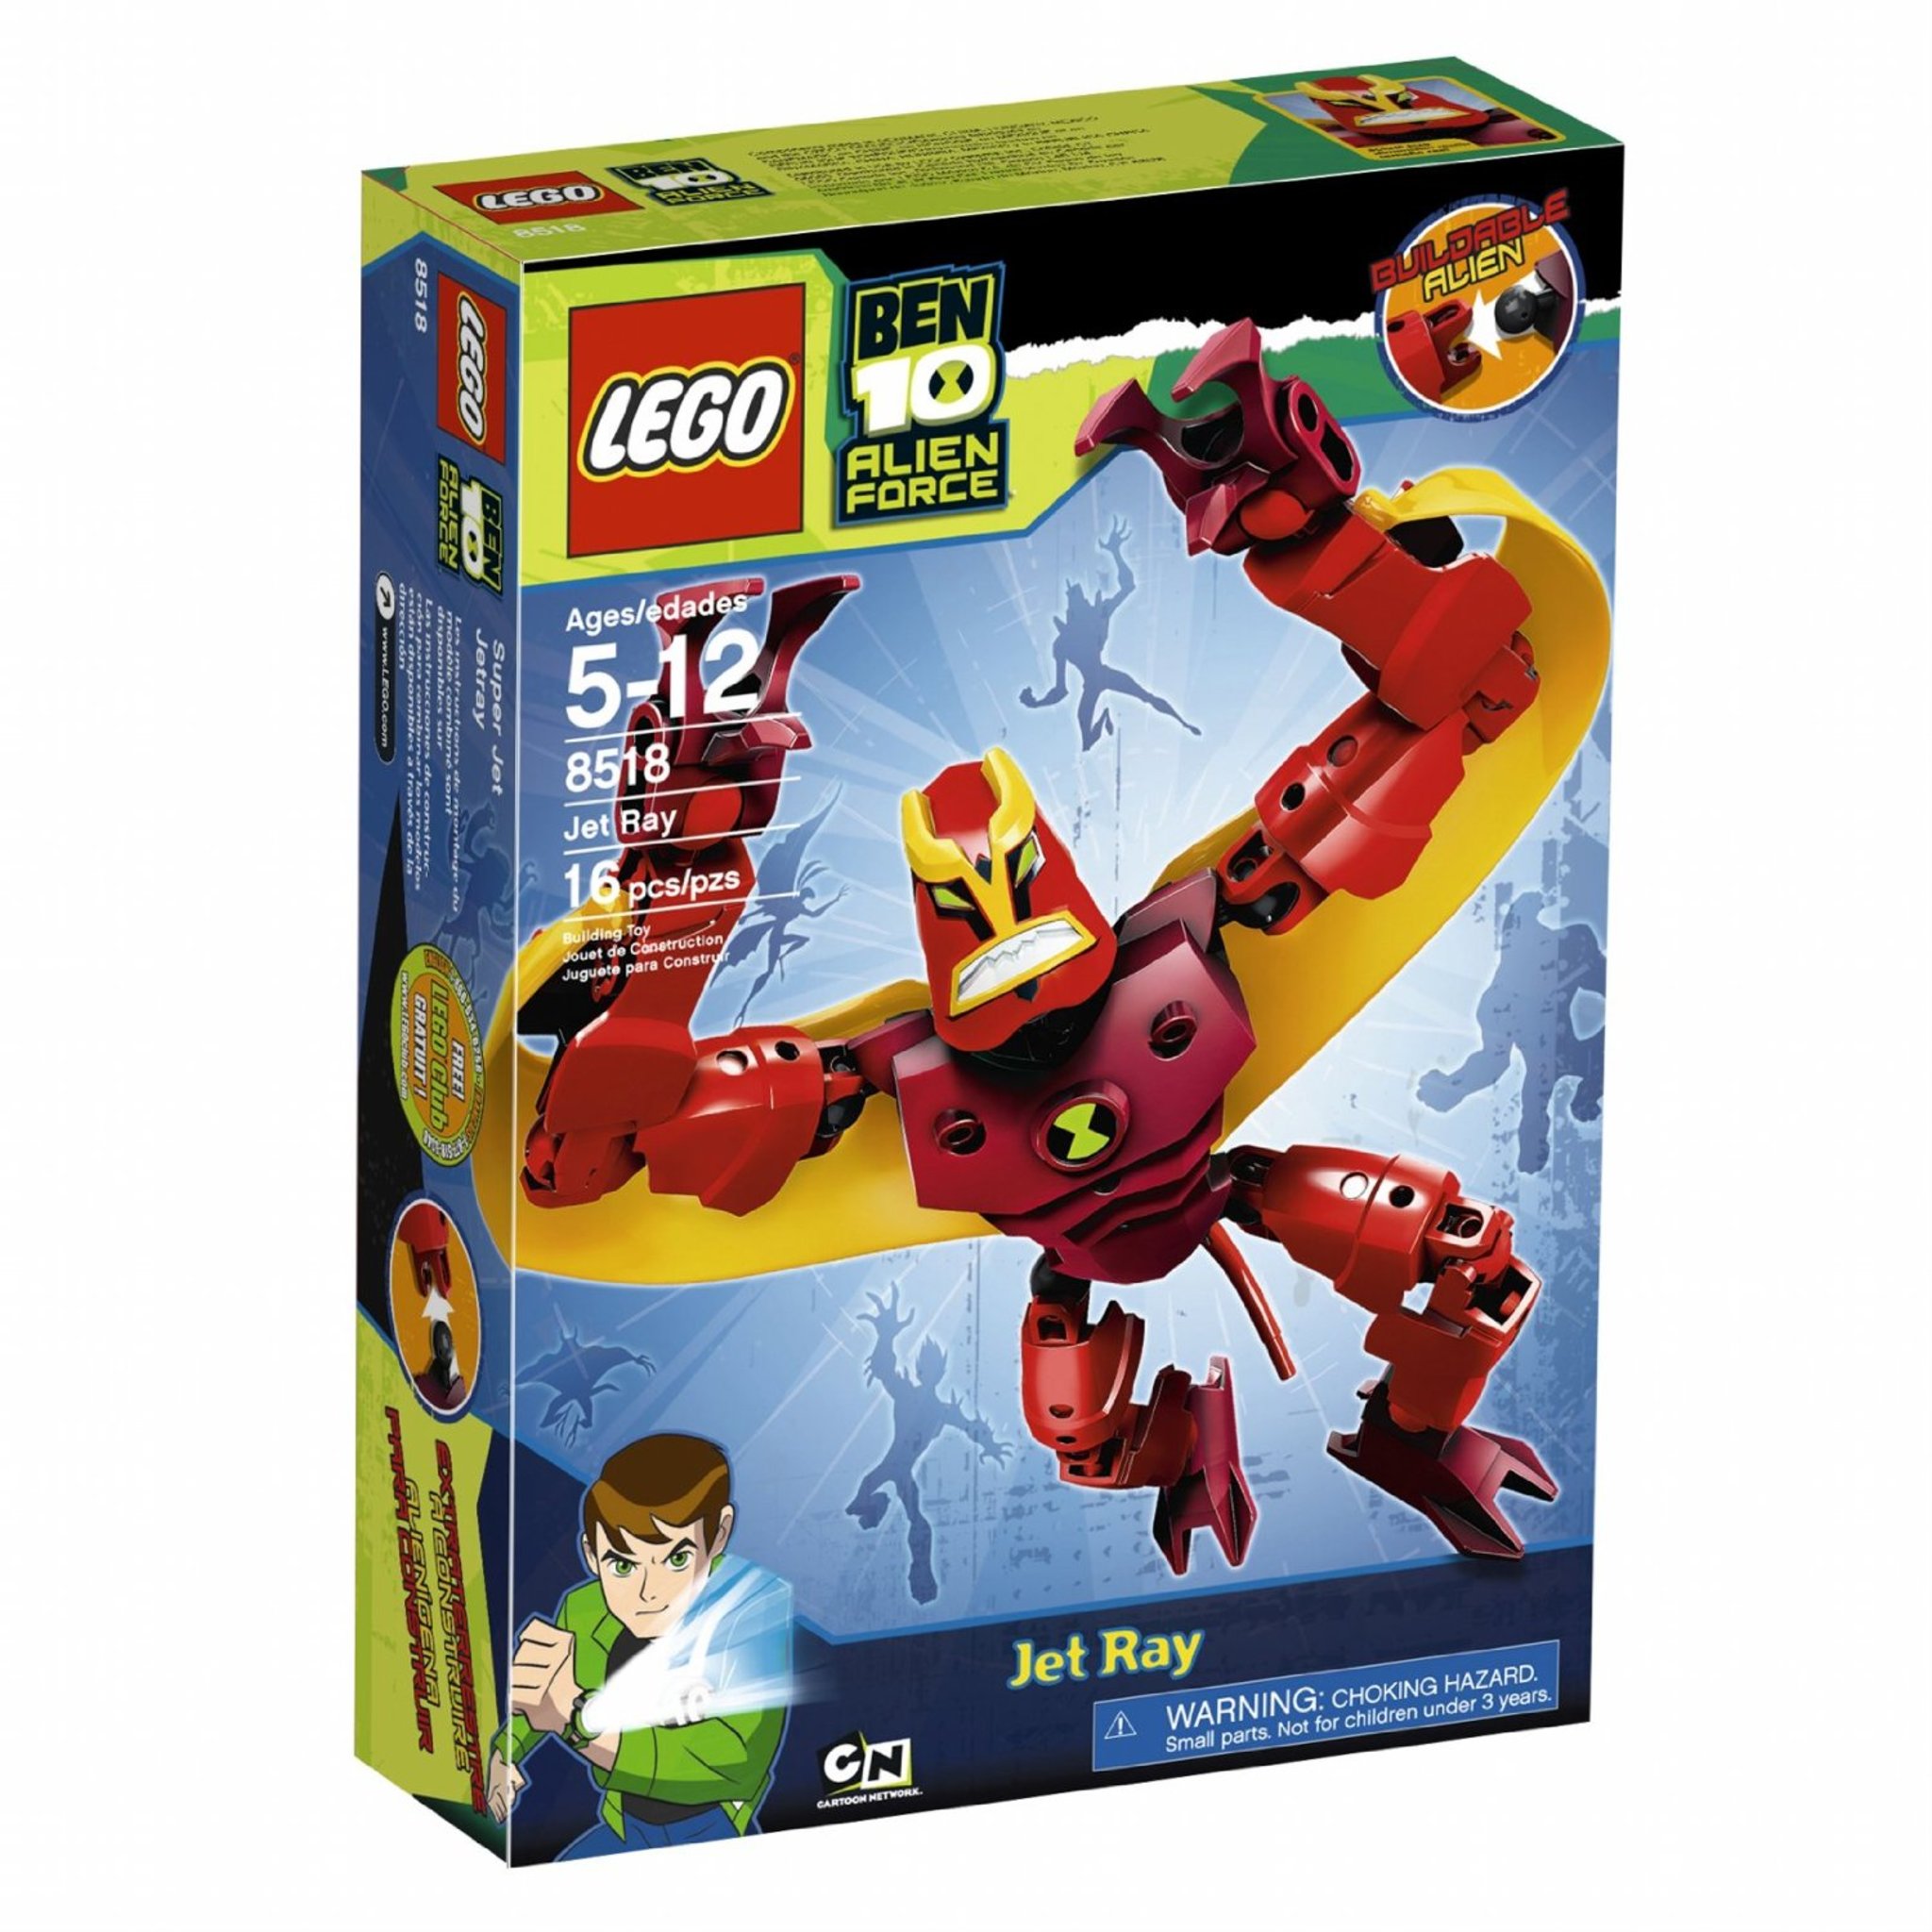  LEGO Ben 10 Alien Force Swampfire 22 Piece Set 8410